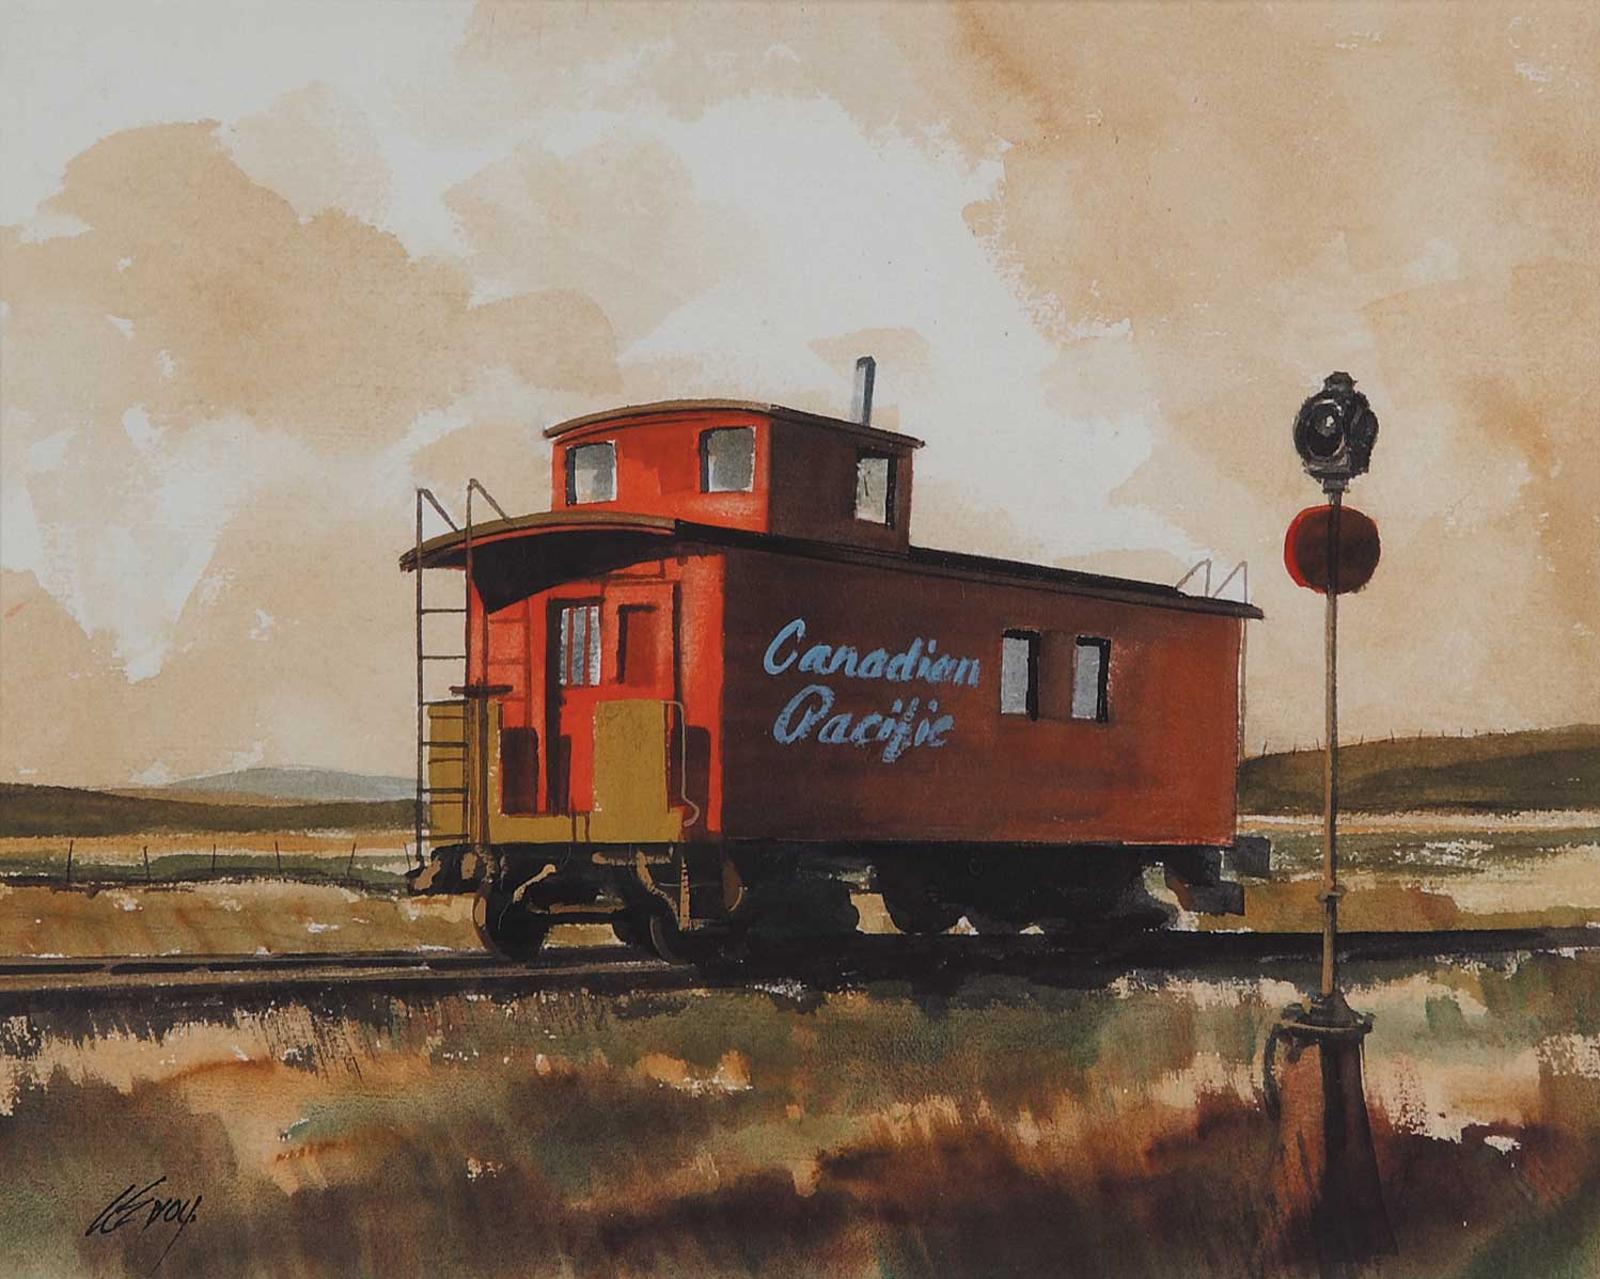 George Arthur [Art] Evoy - The Little Red Caboose